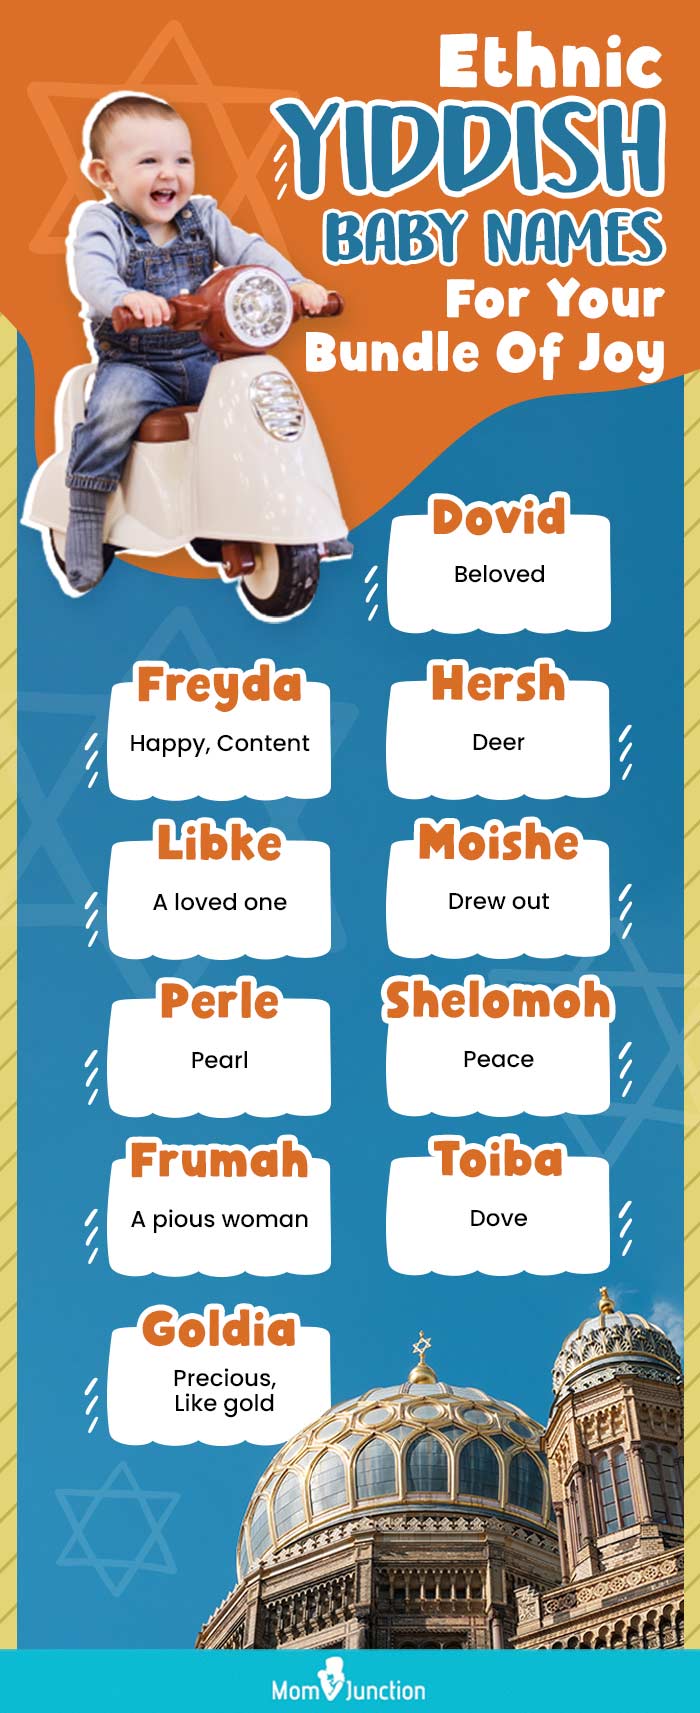 ethnic yiddish baby names for your bundle of joy (infographic)